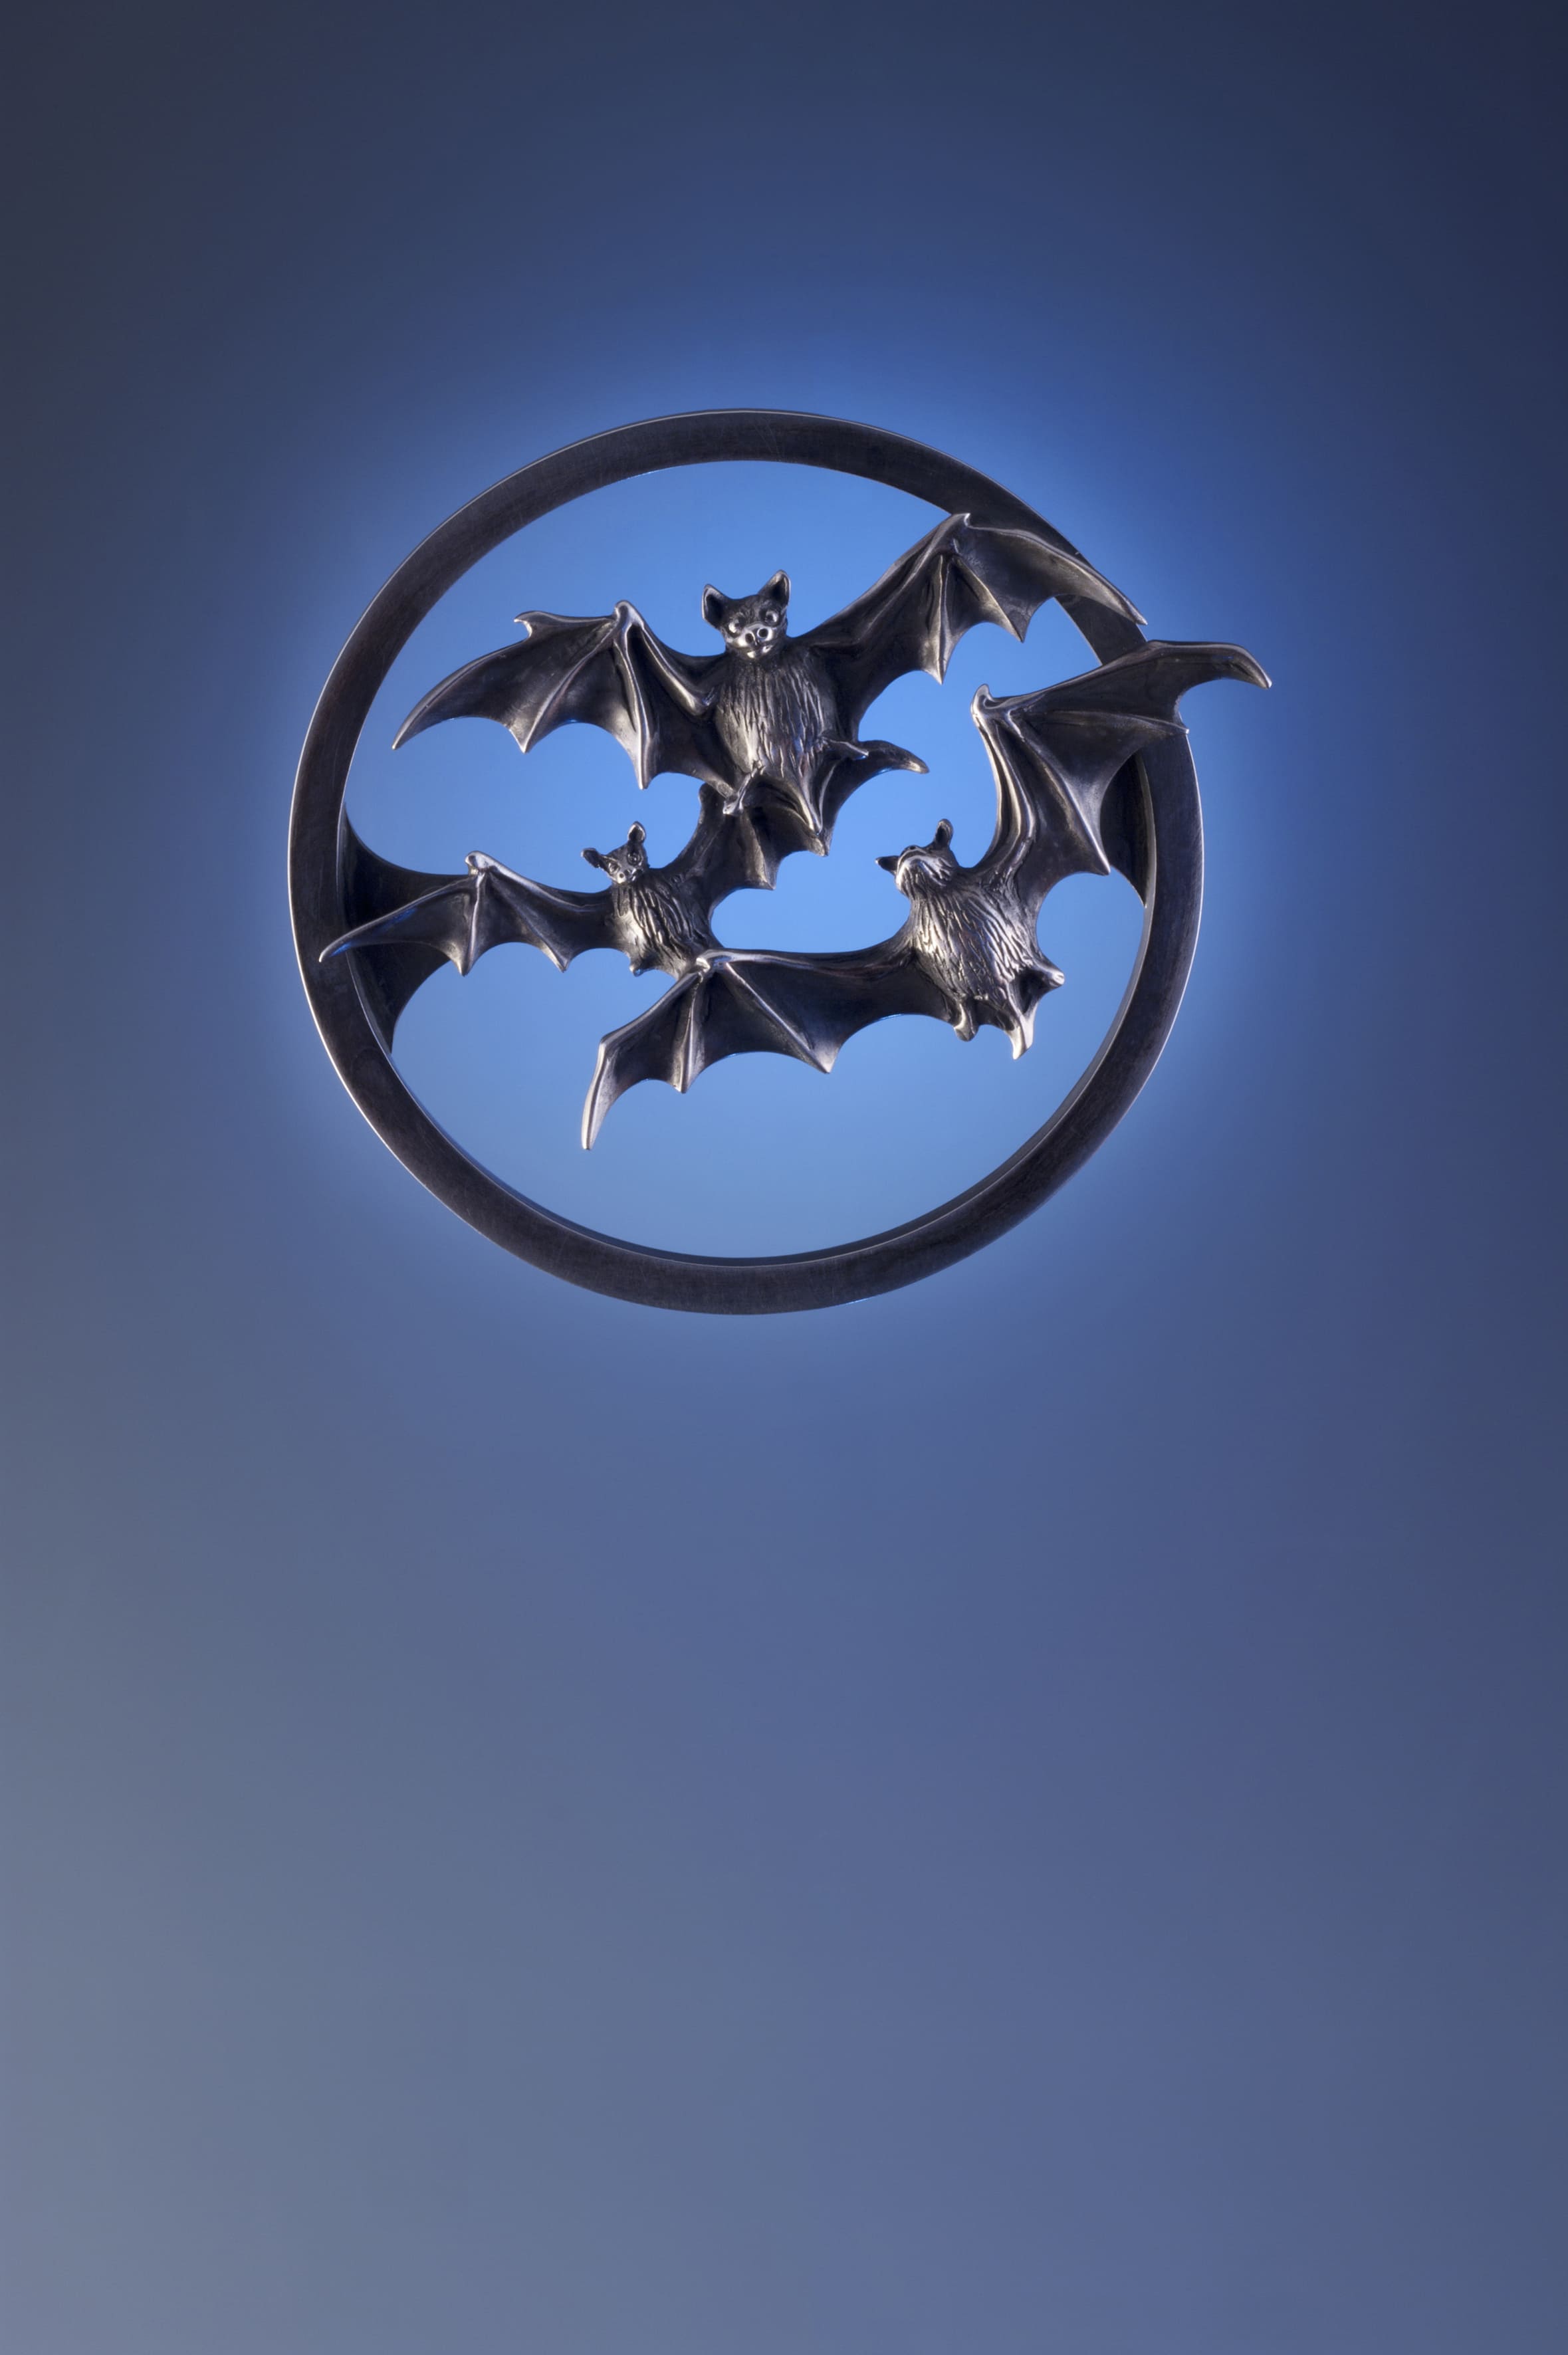 Bats over a clear Moon